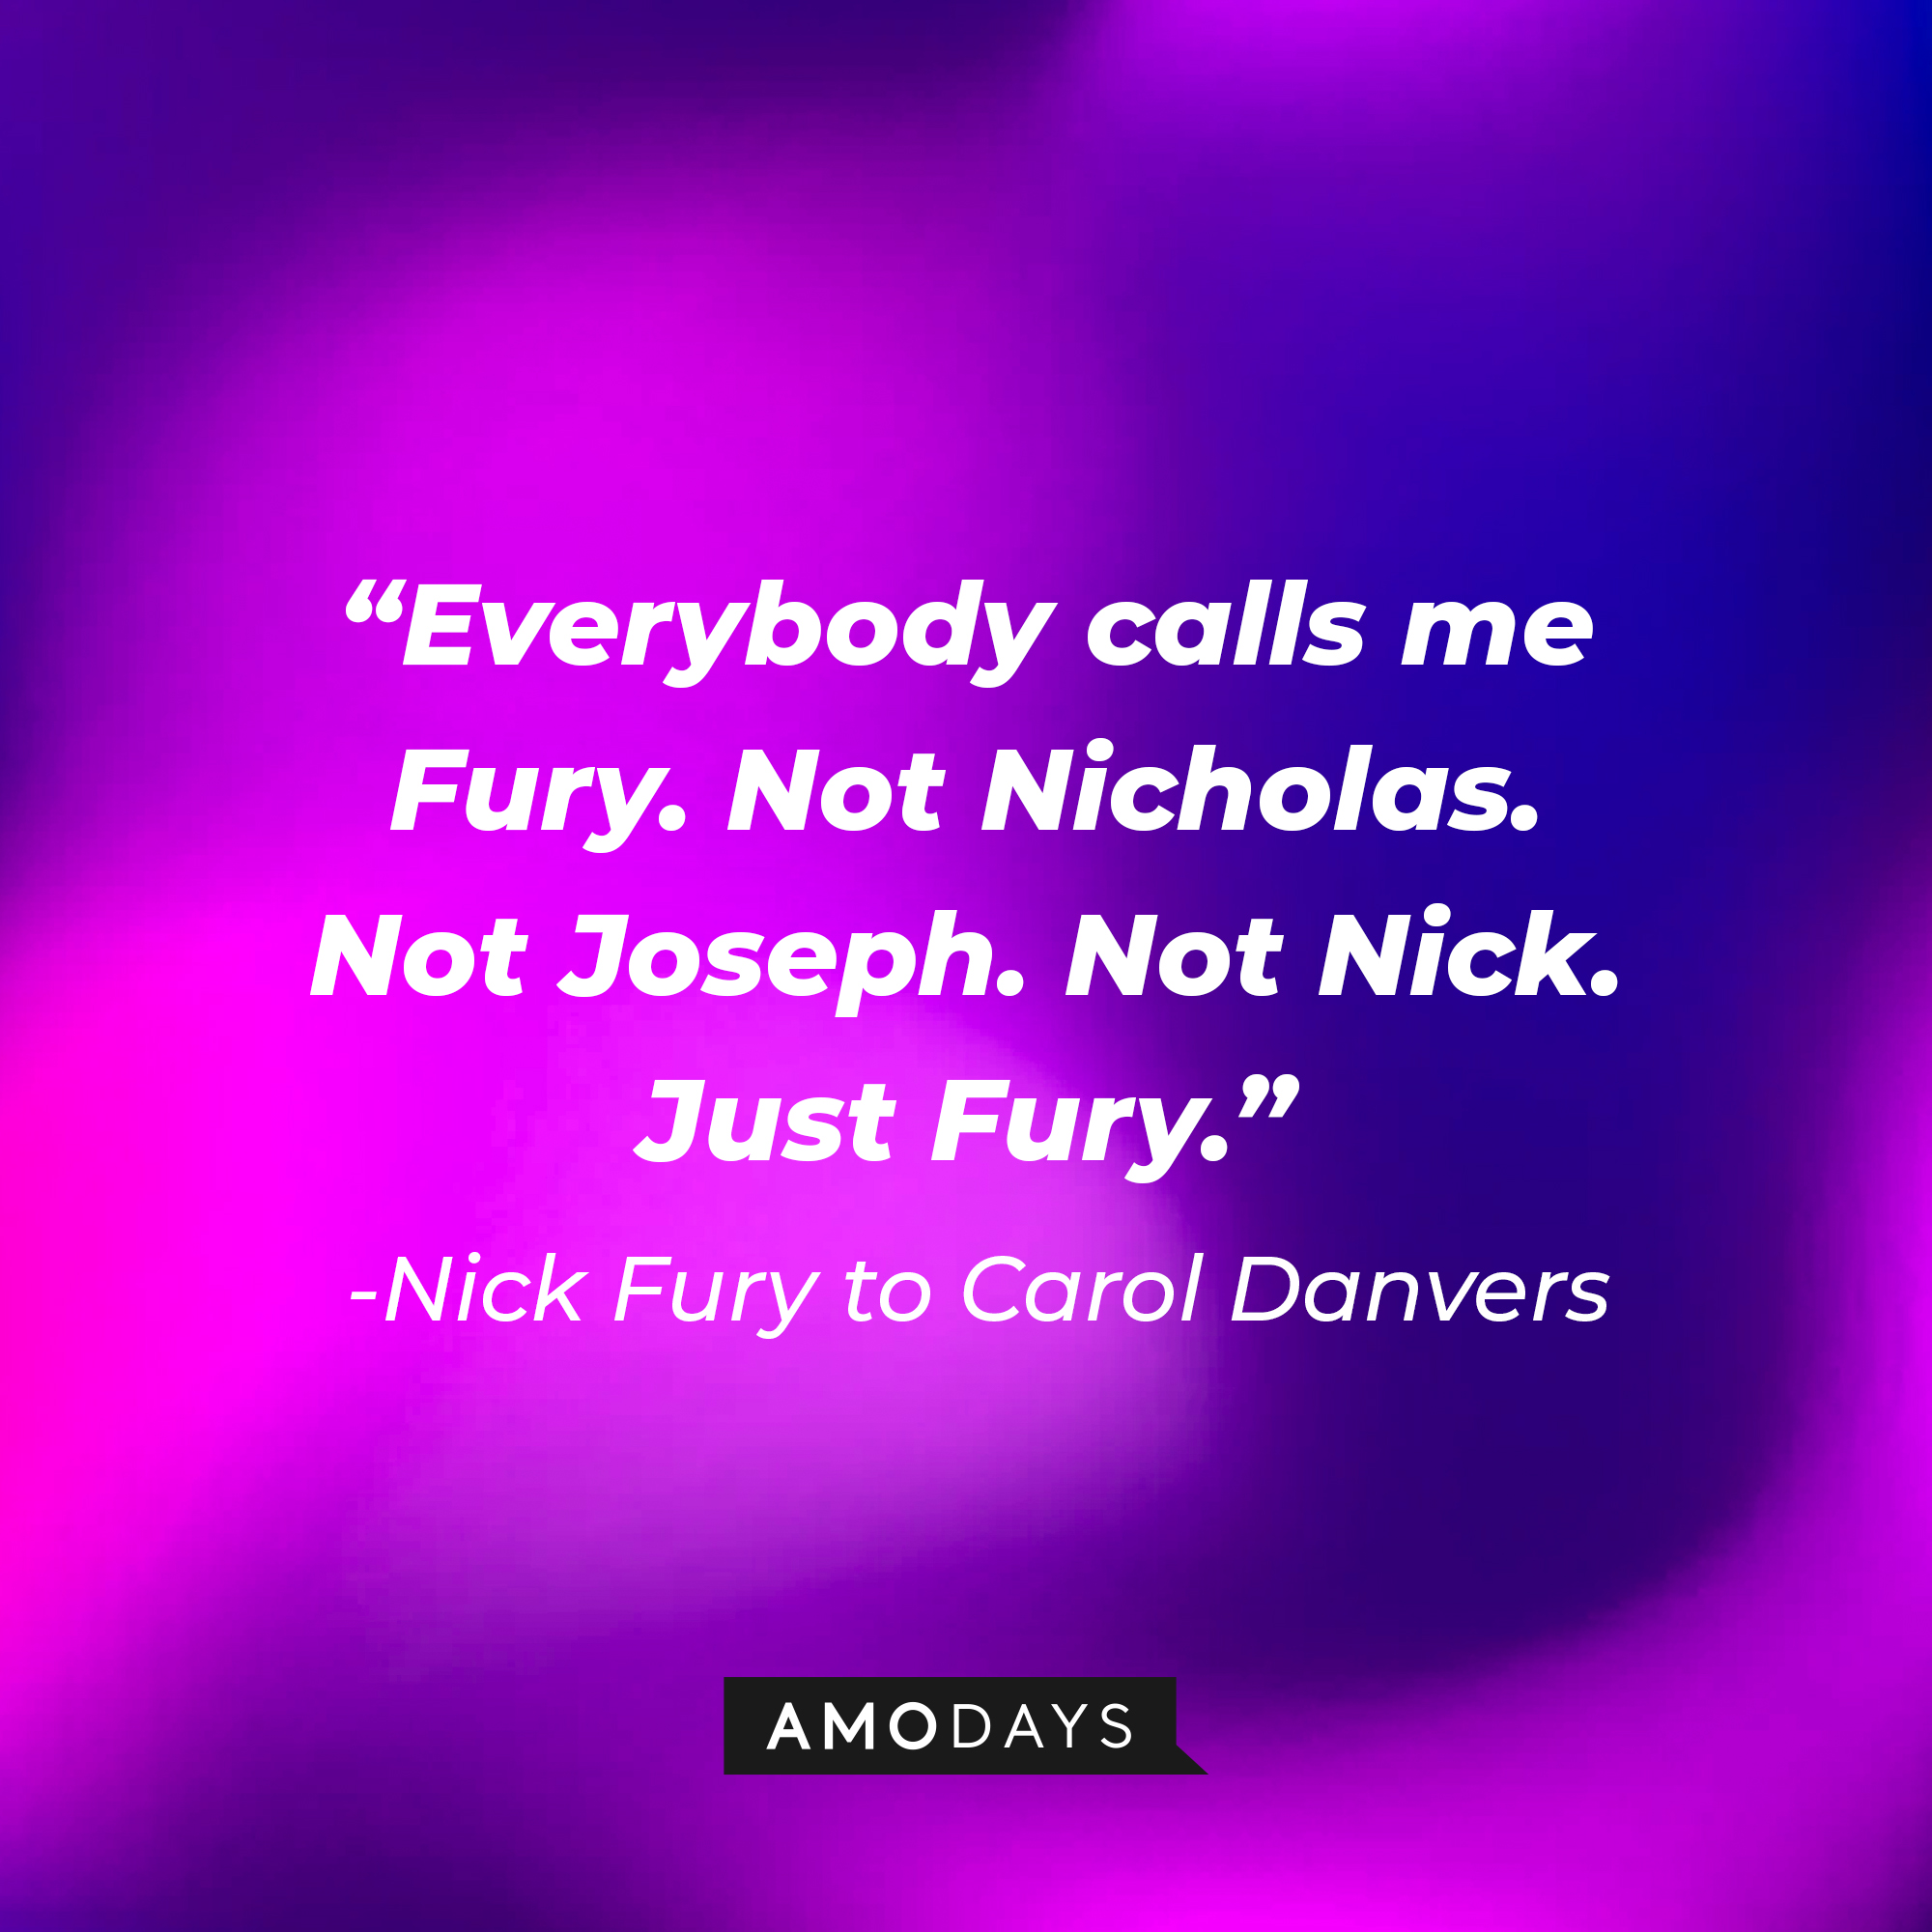 Nick Fury's quote: "Everybody calls me Fury. Not Nicholas. Not Joseph. Not Nick. Just Fury." | Source: AmoDays